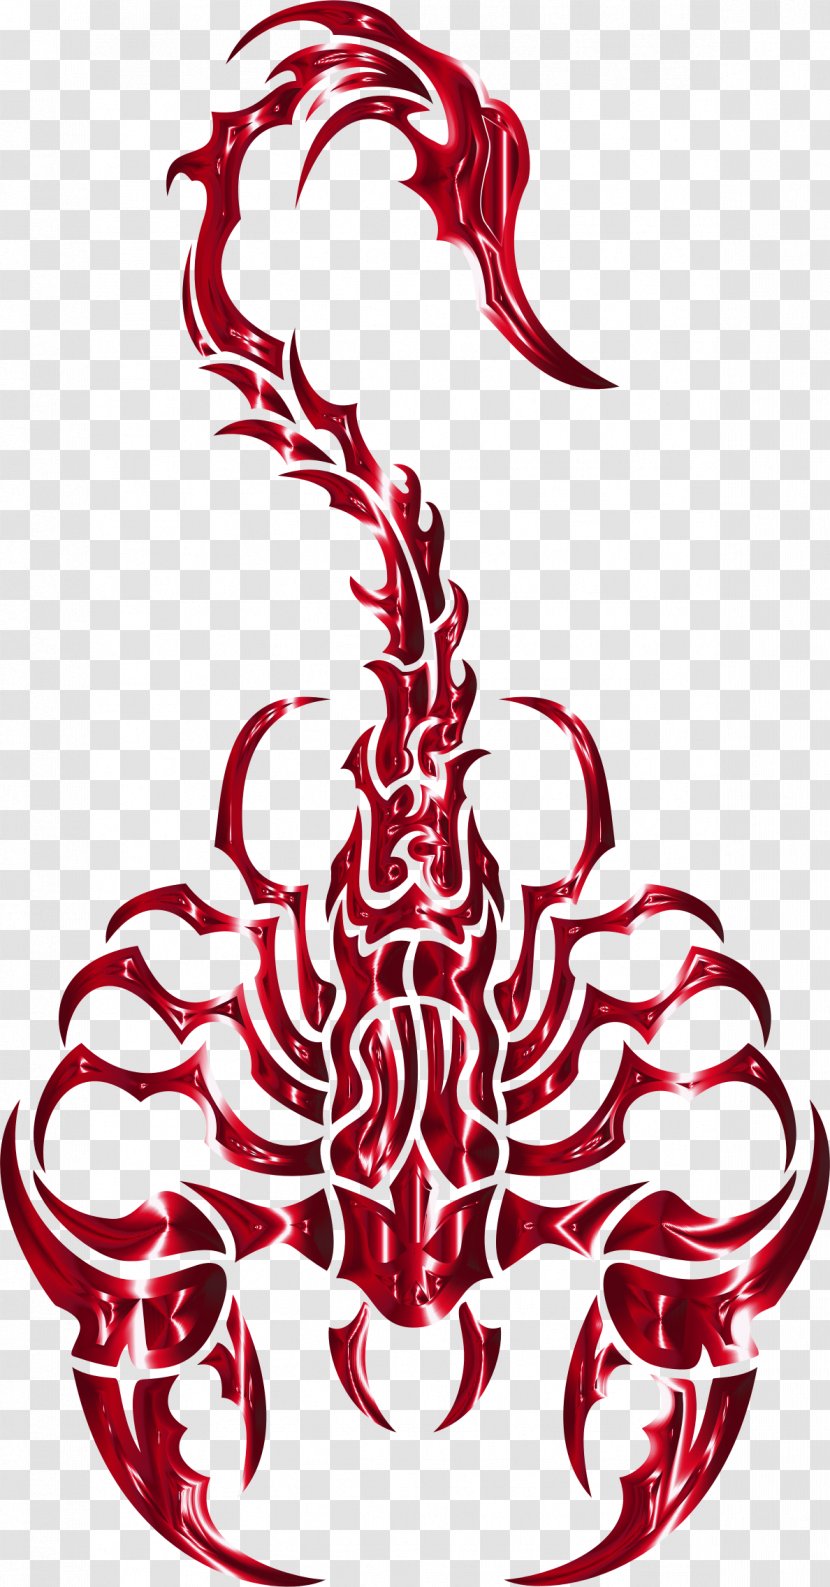 Scorpion Arachnid Clip Art - Scorpions Transparent PNG